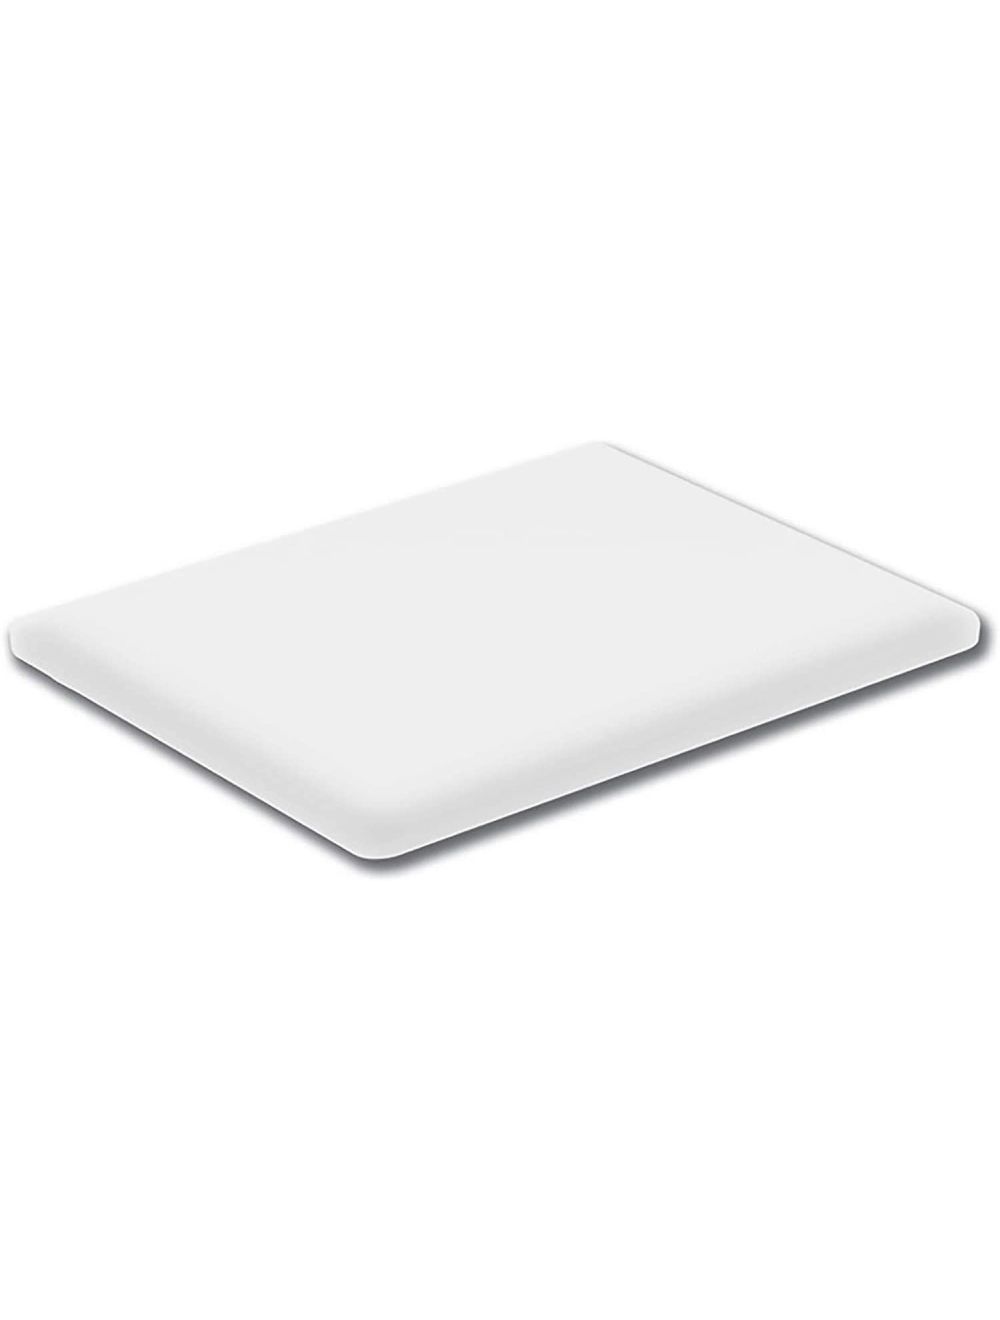 Raj Cutting Board, White, 60 x 40 x 2 cm